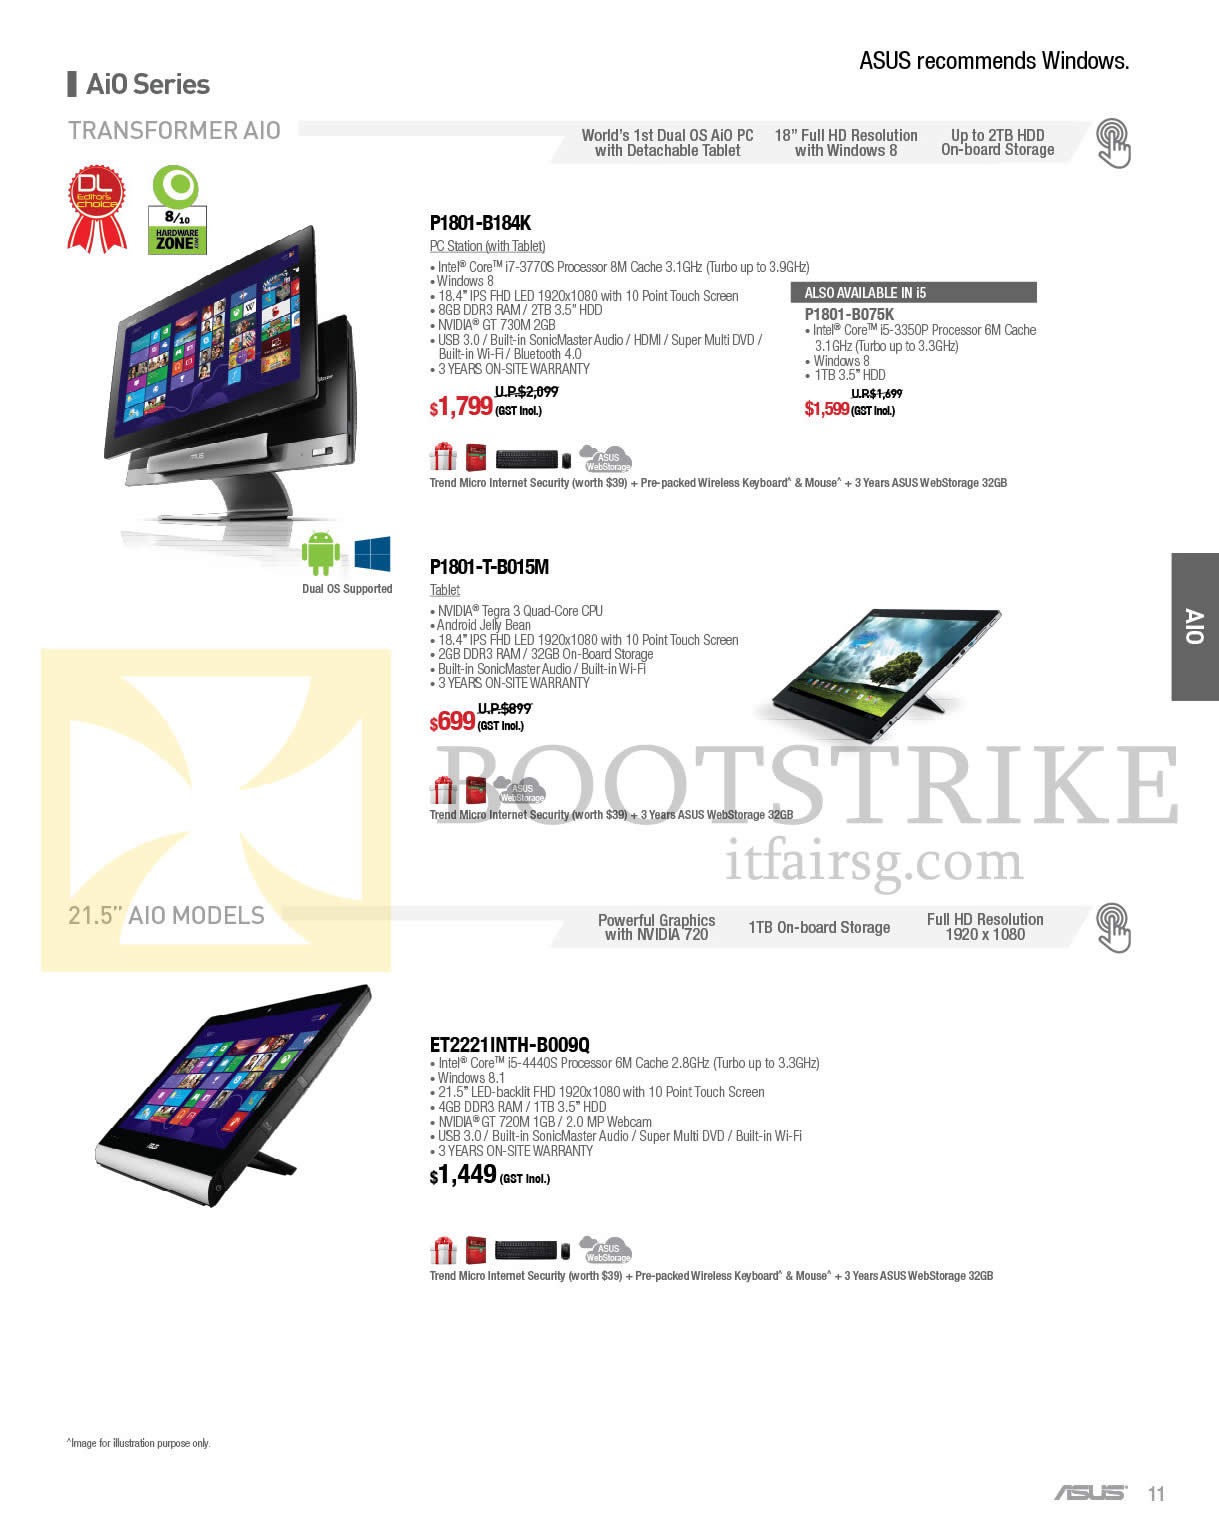 COMEX 2014 price list image brochure of ASUS AIO Desktop PCs Transformer P1801-B184K, P1801-B075K, P1801-T-B015M, ET2221INTH-B009Q